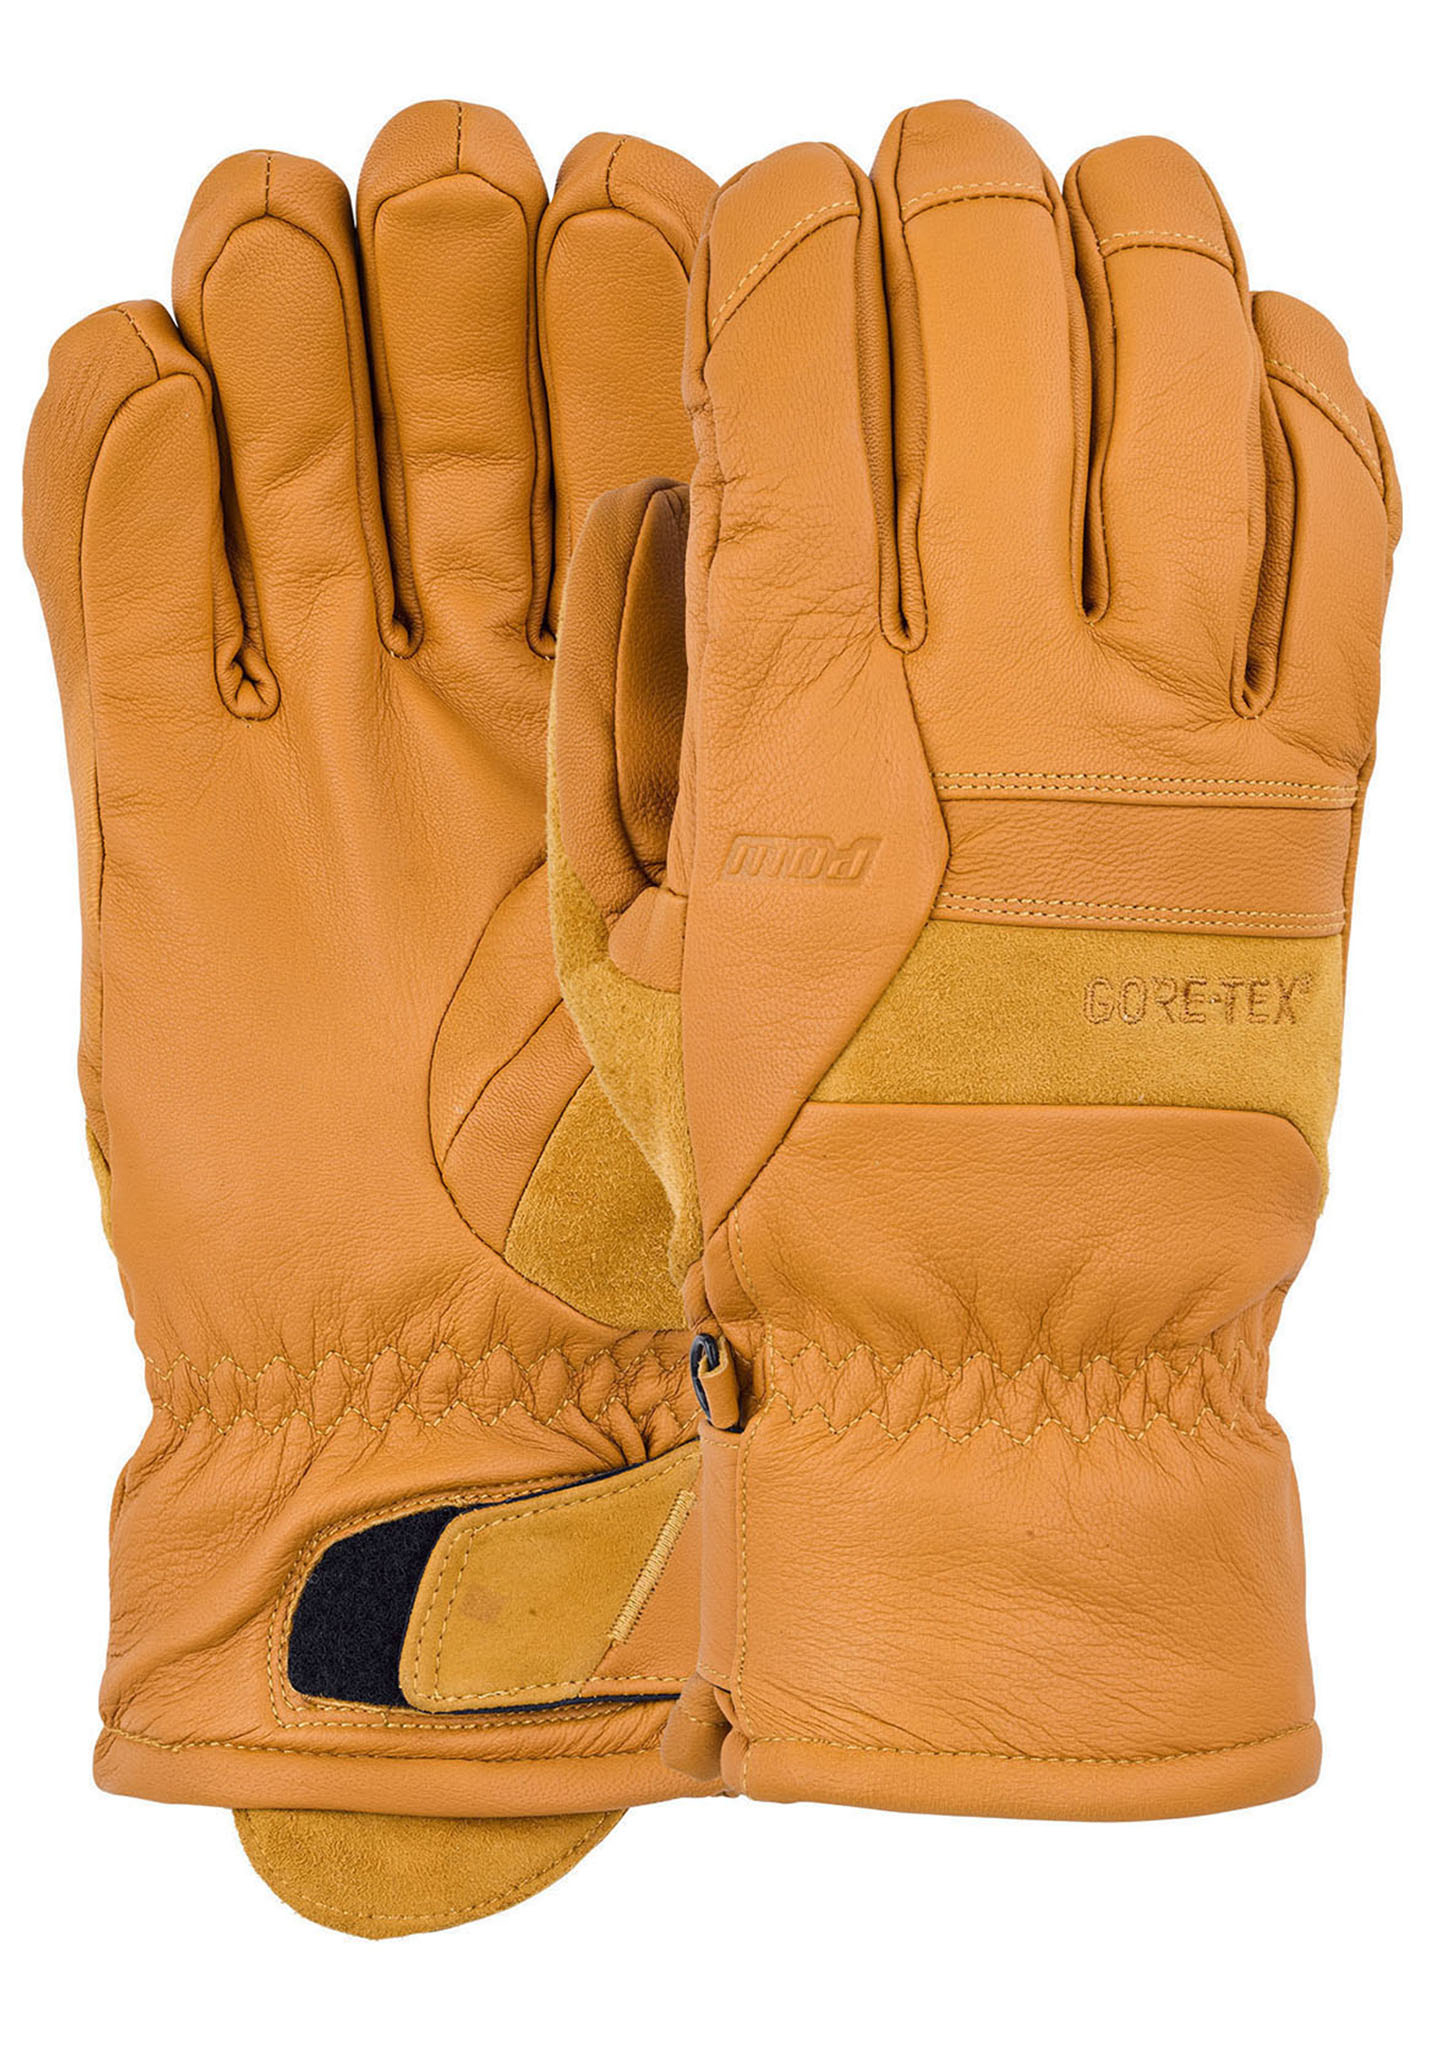 Pow Stealth GTX +Warm Handschuhe hirschhorn braun M